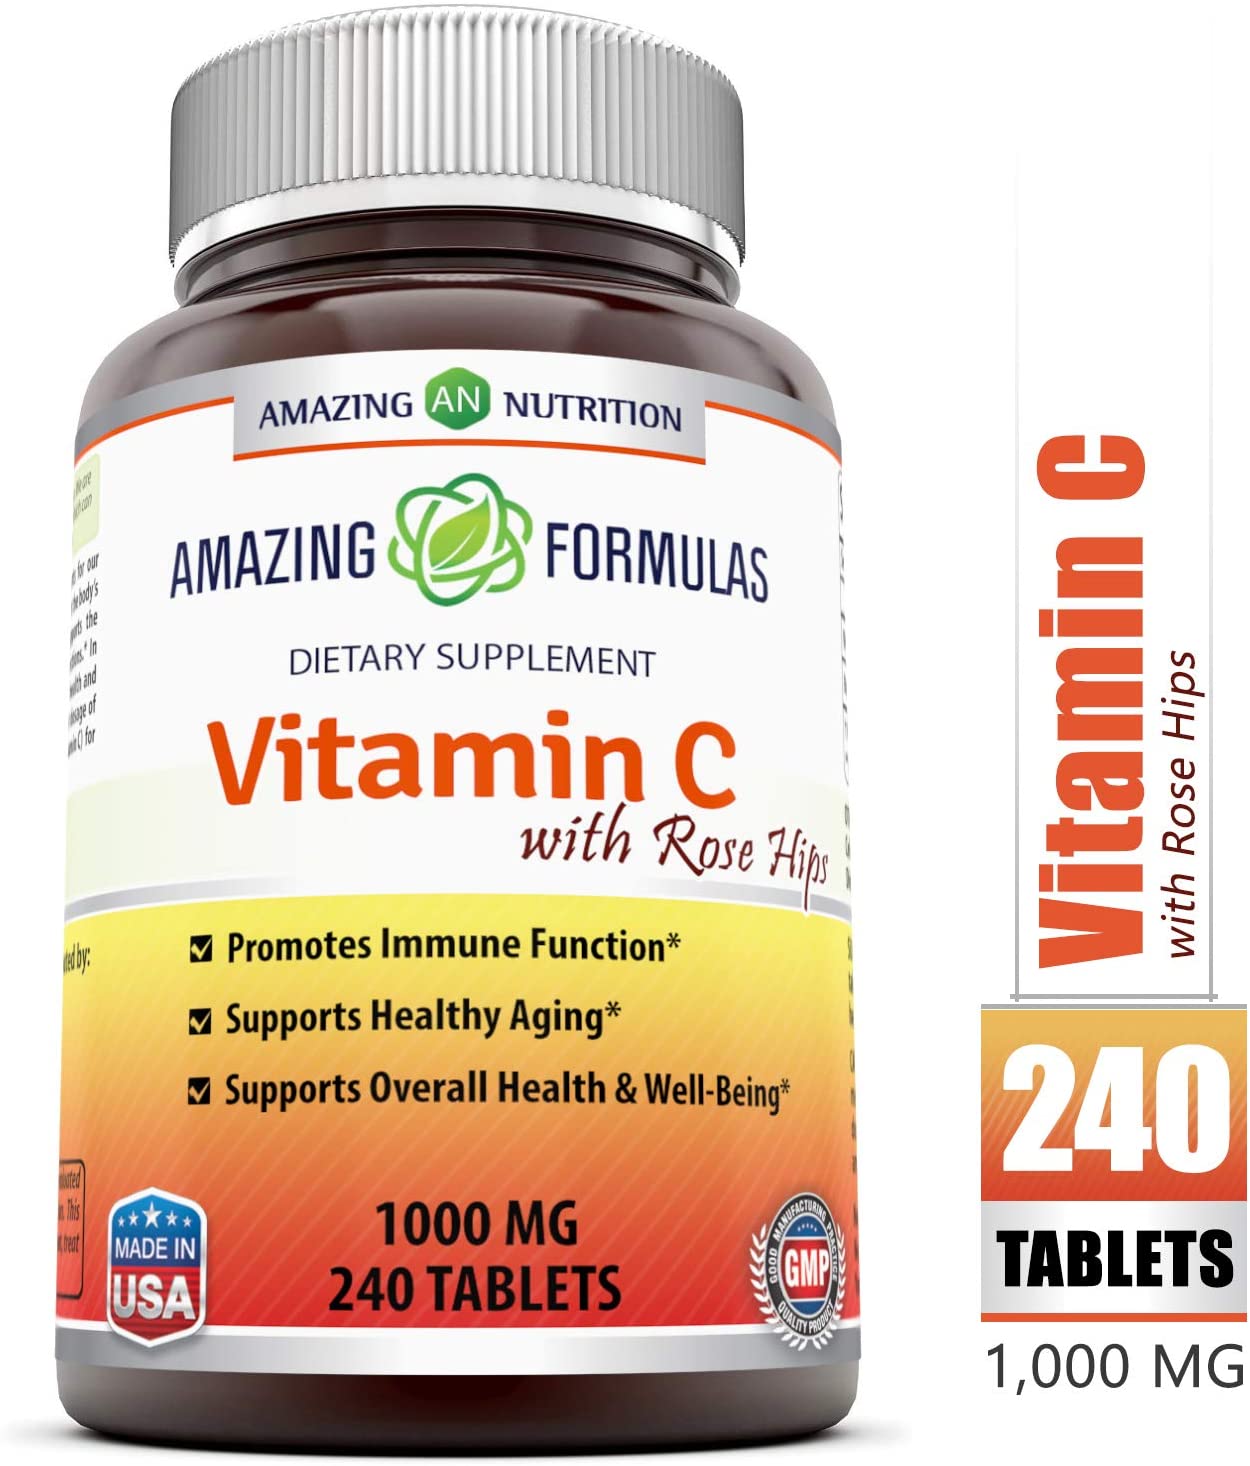 Amazing Formulas Non-GMO Vitamin C With Rose Hips, 240-Count